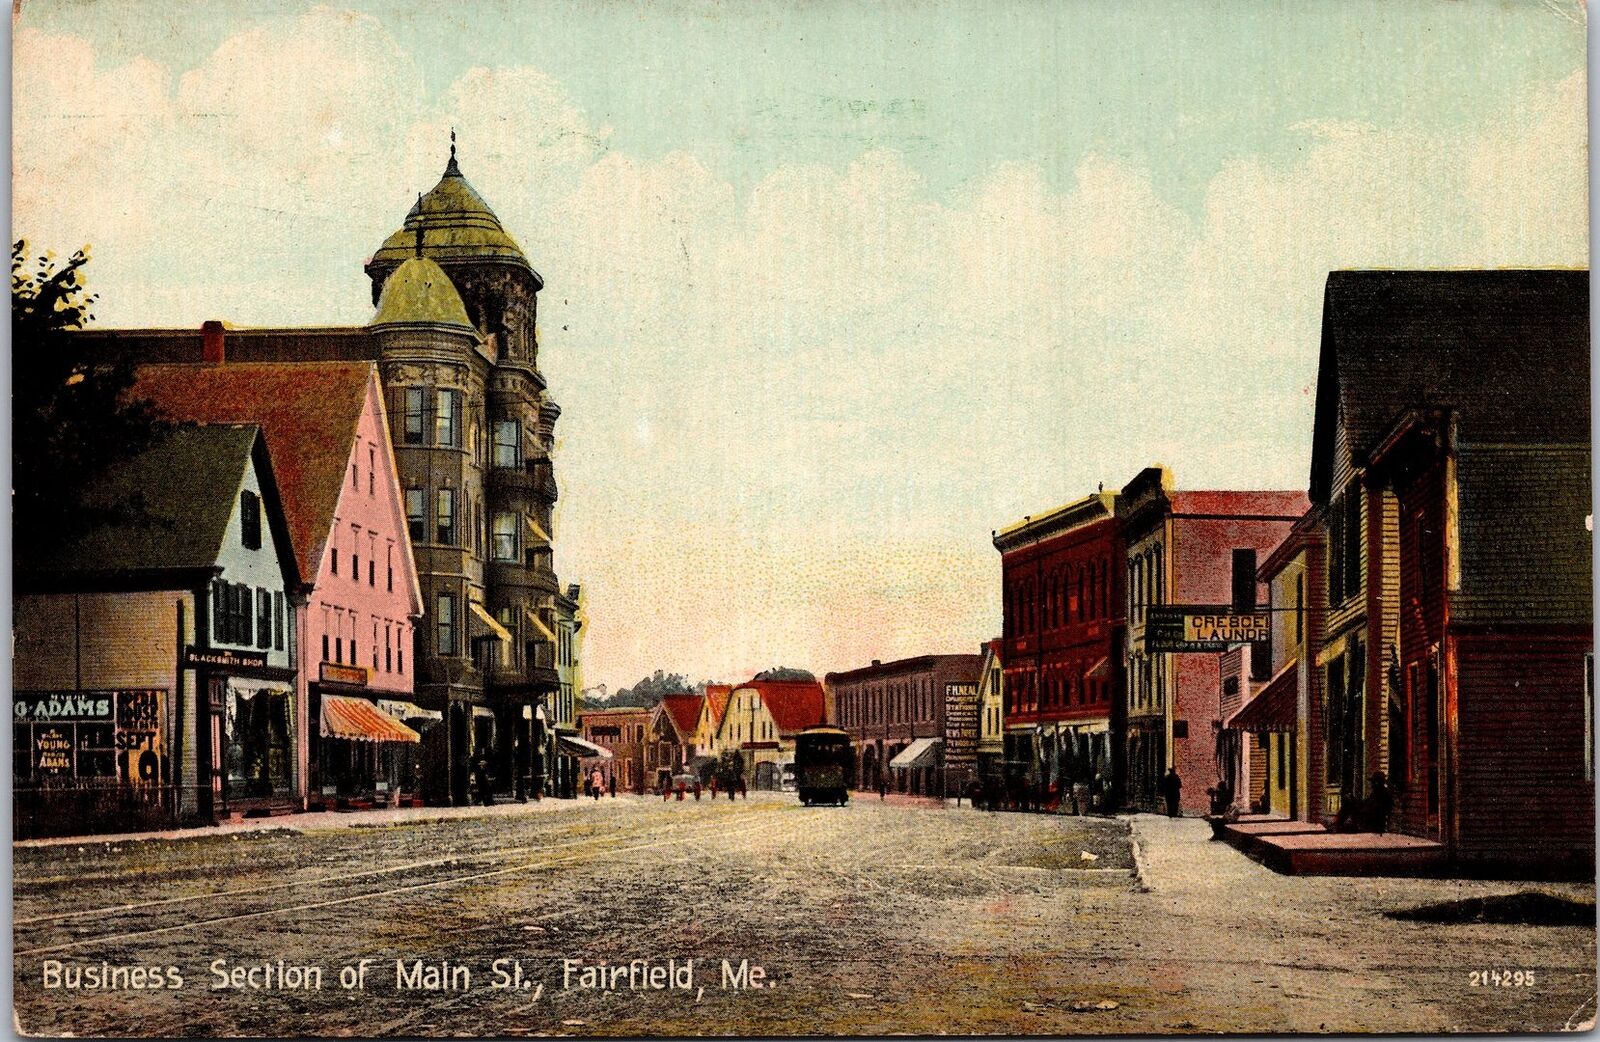 FAIRFIELD ME - Main Street Business Section Postcard - 1917